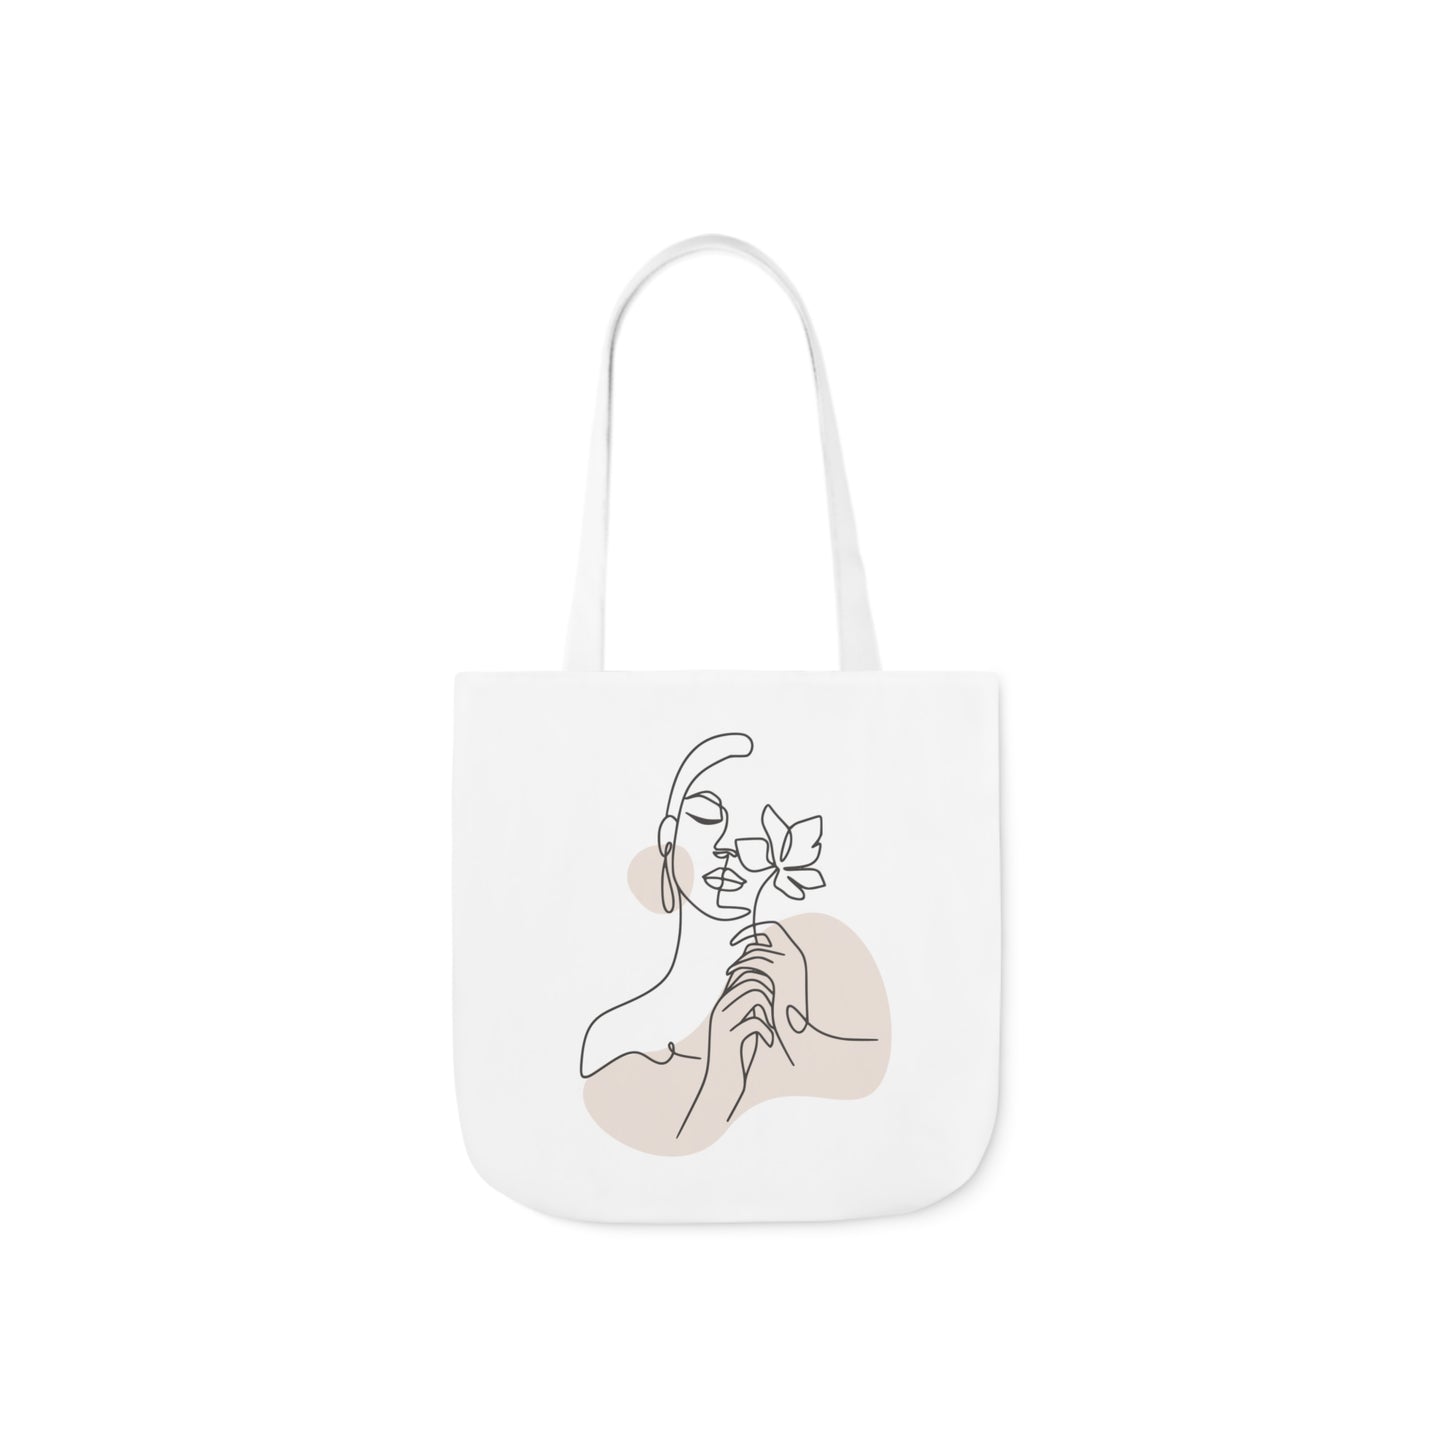 Woman Illustration Tote Bag